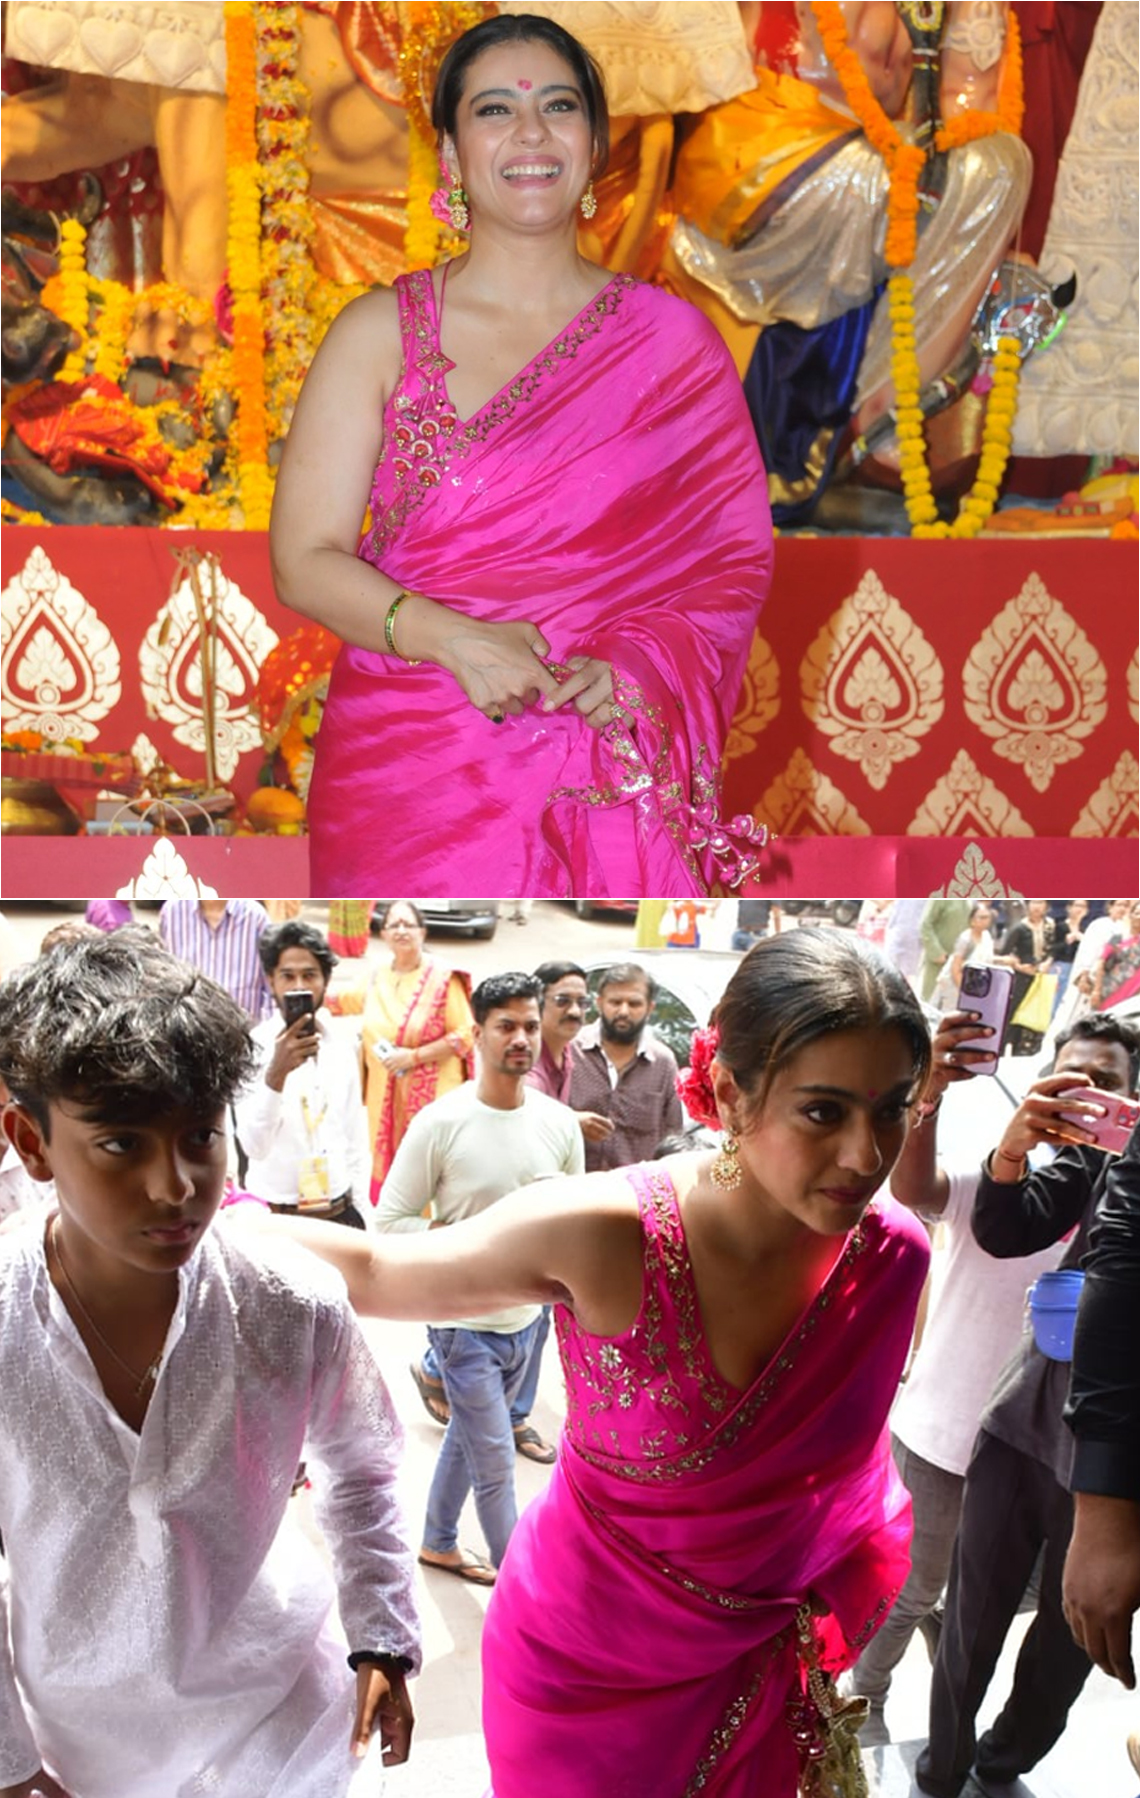 Kajol with her son Yug arrive for Durga Puja